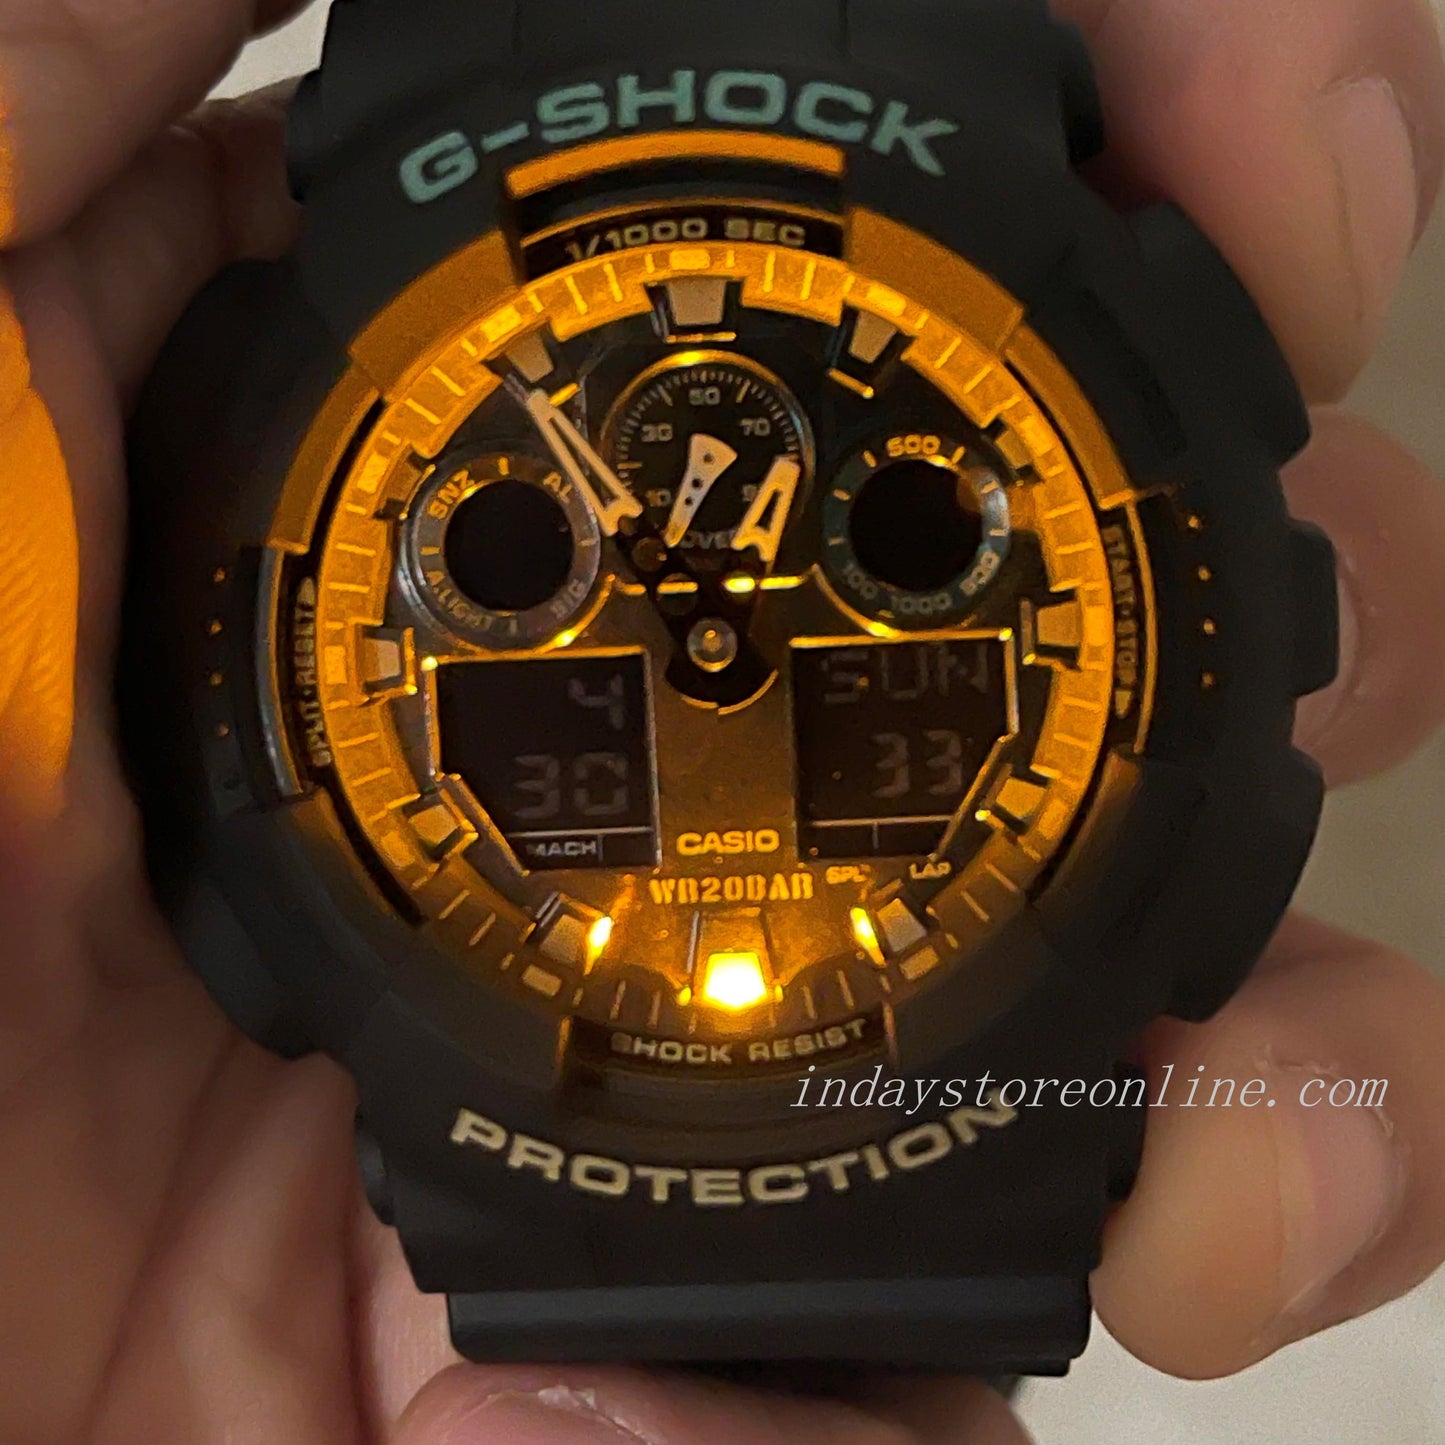 Casio G-Shock Men's Watch GA-100RC-1A Analog-Digital GA-100 Series Sporty design Great for Extreme Sports